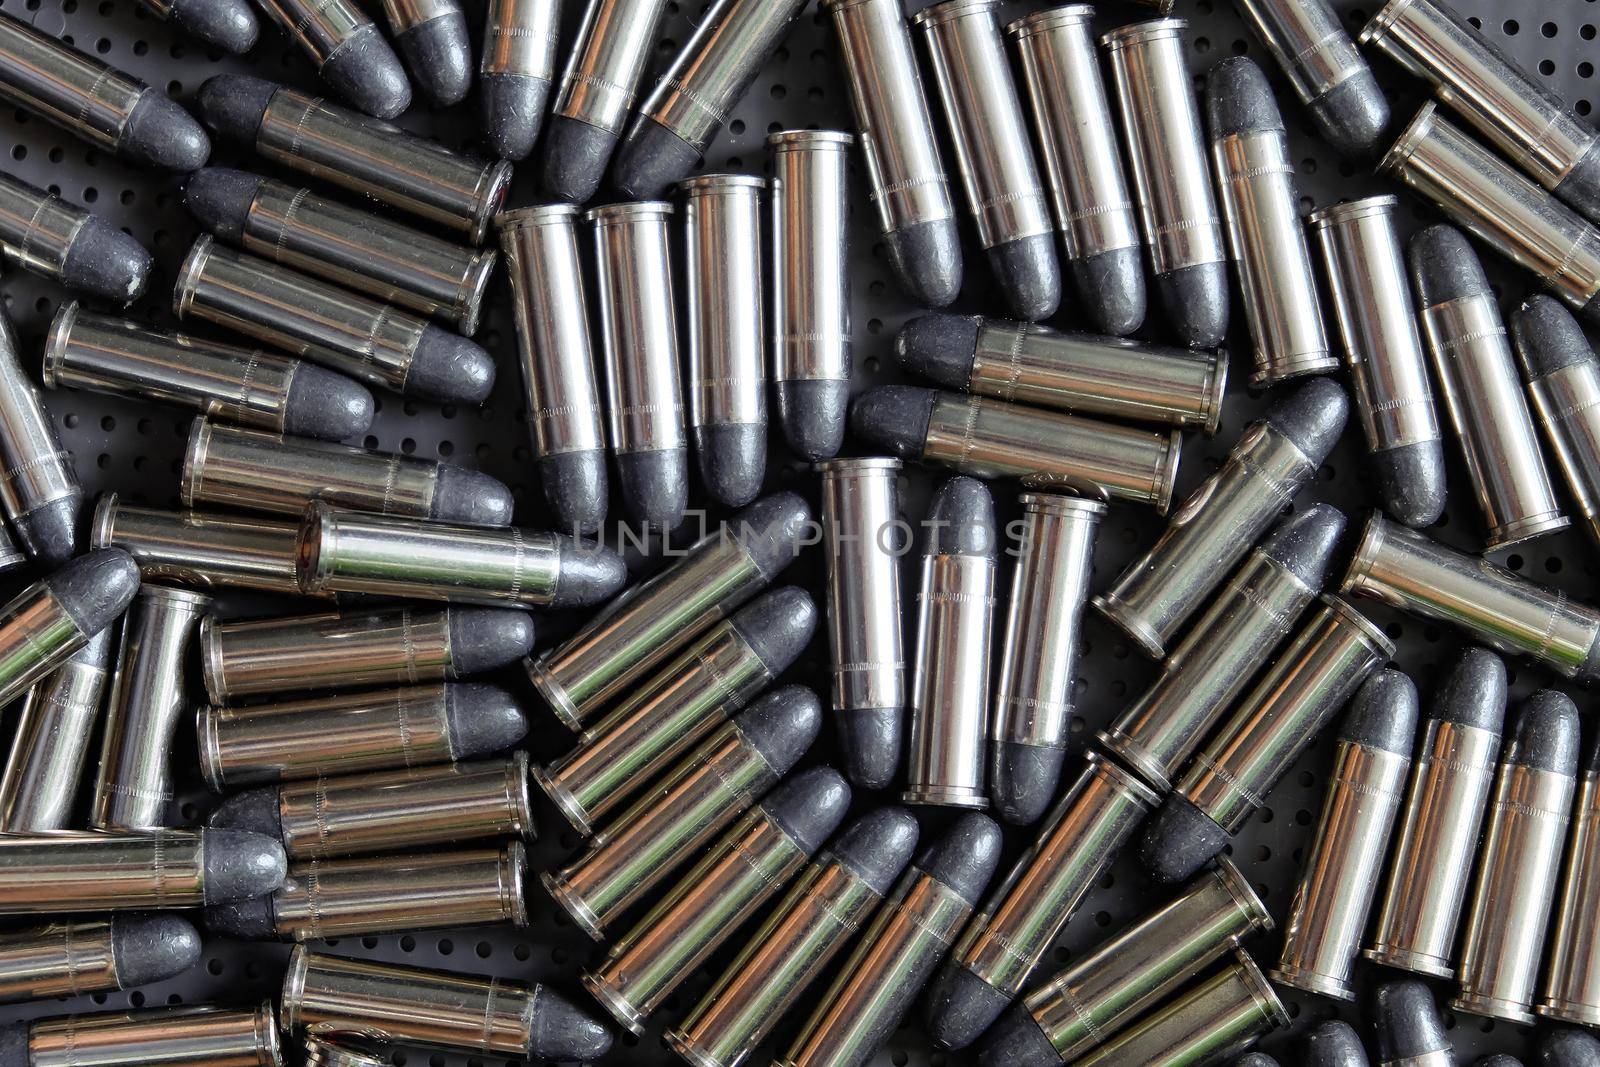 Bullets, Image of Cartridges of .38 pistols ammo.